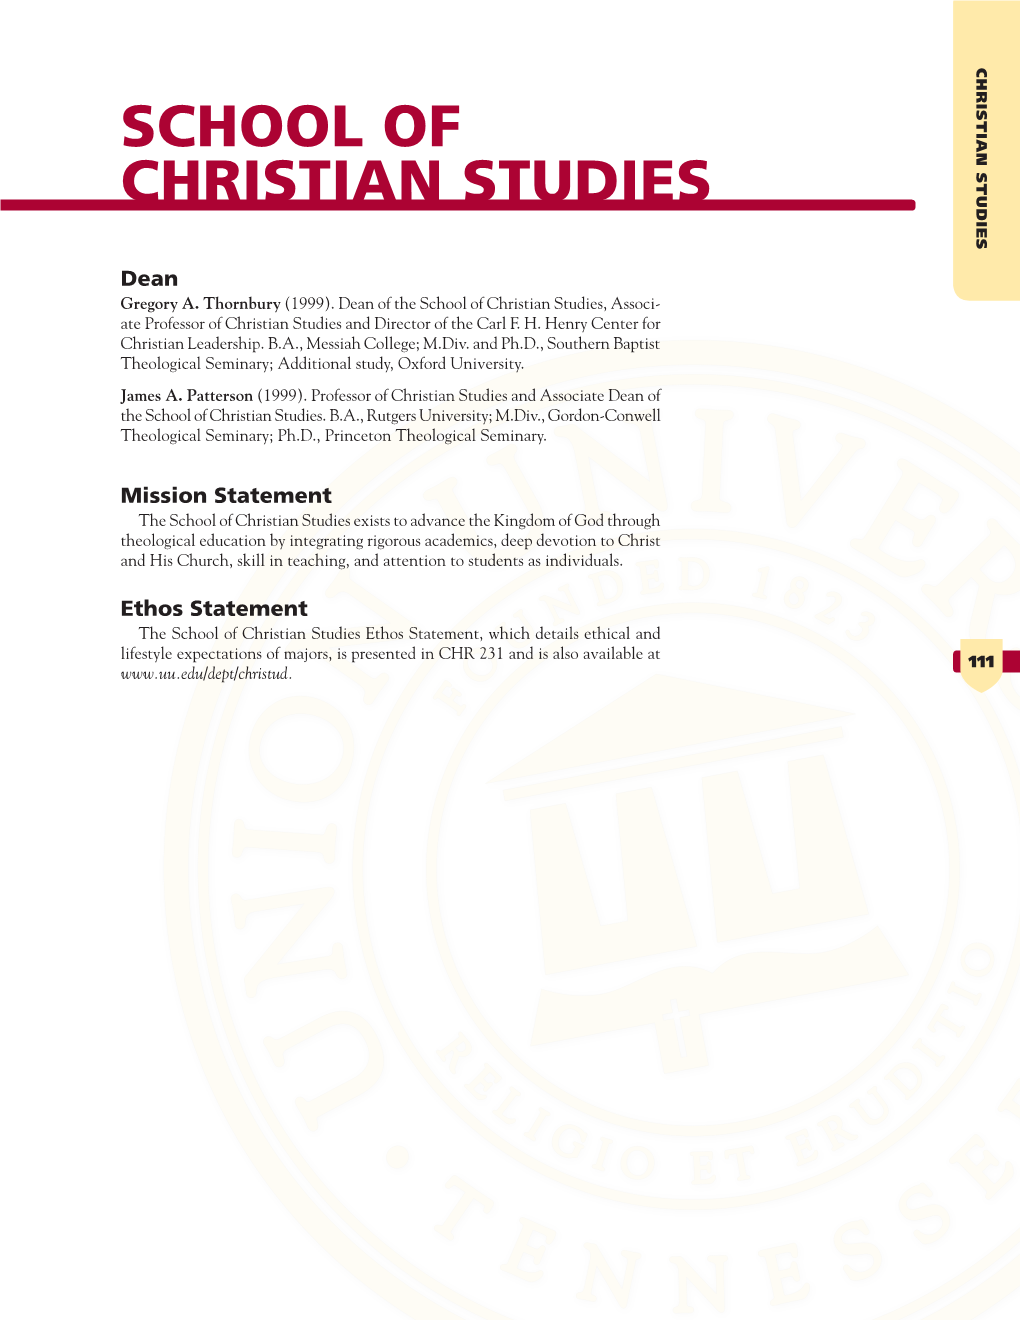 School of Christian Studies